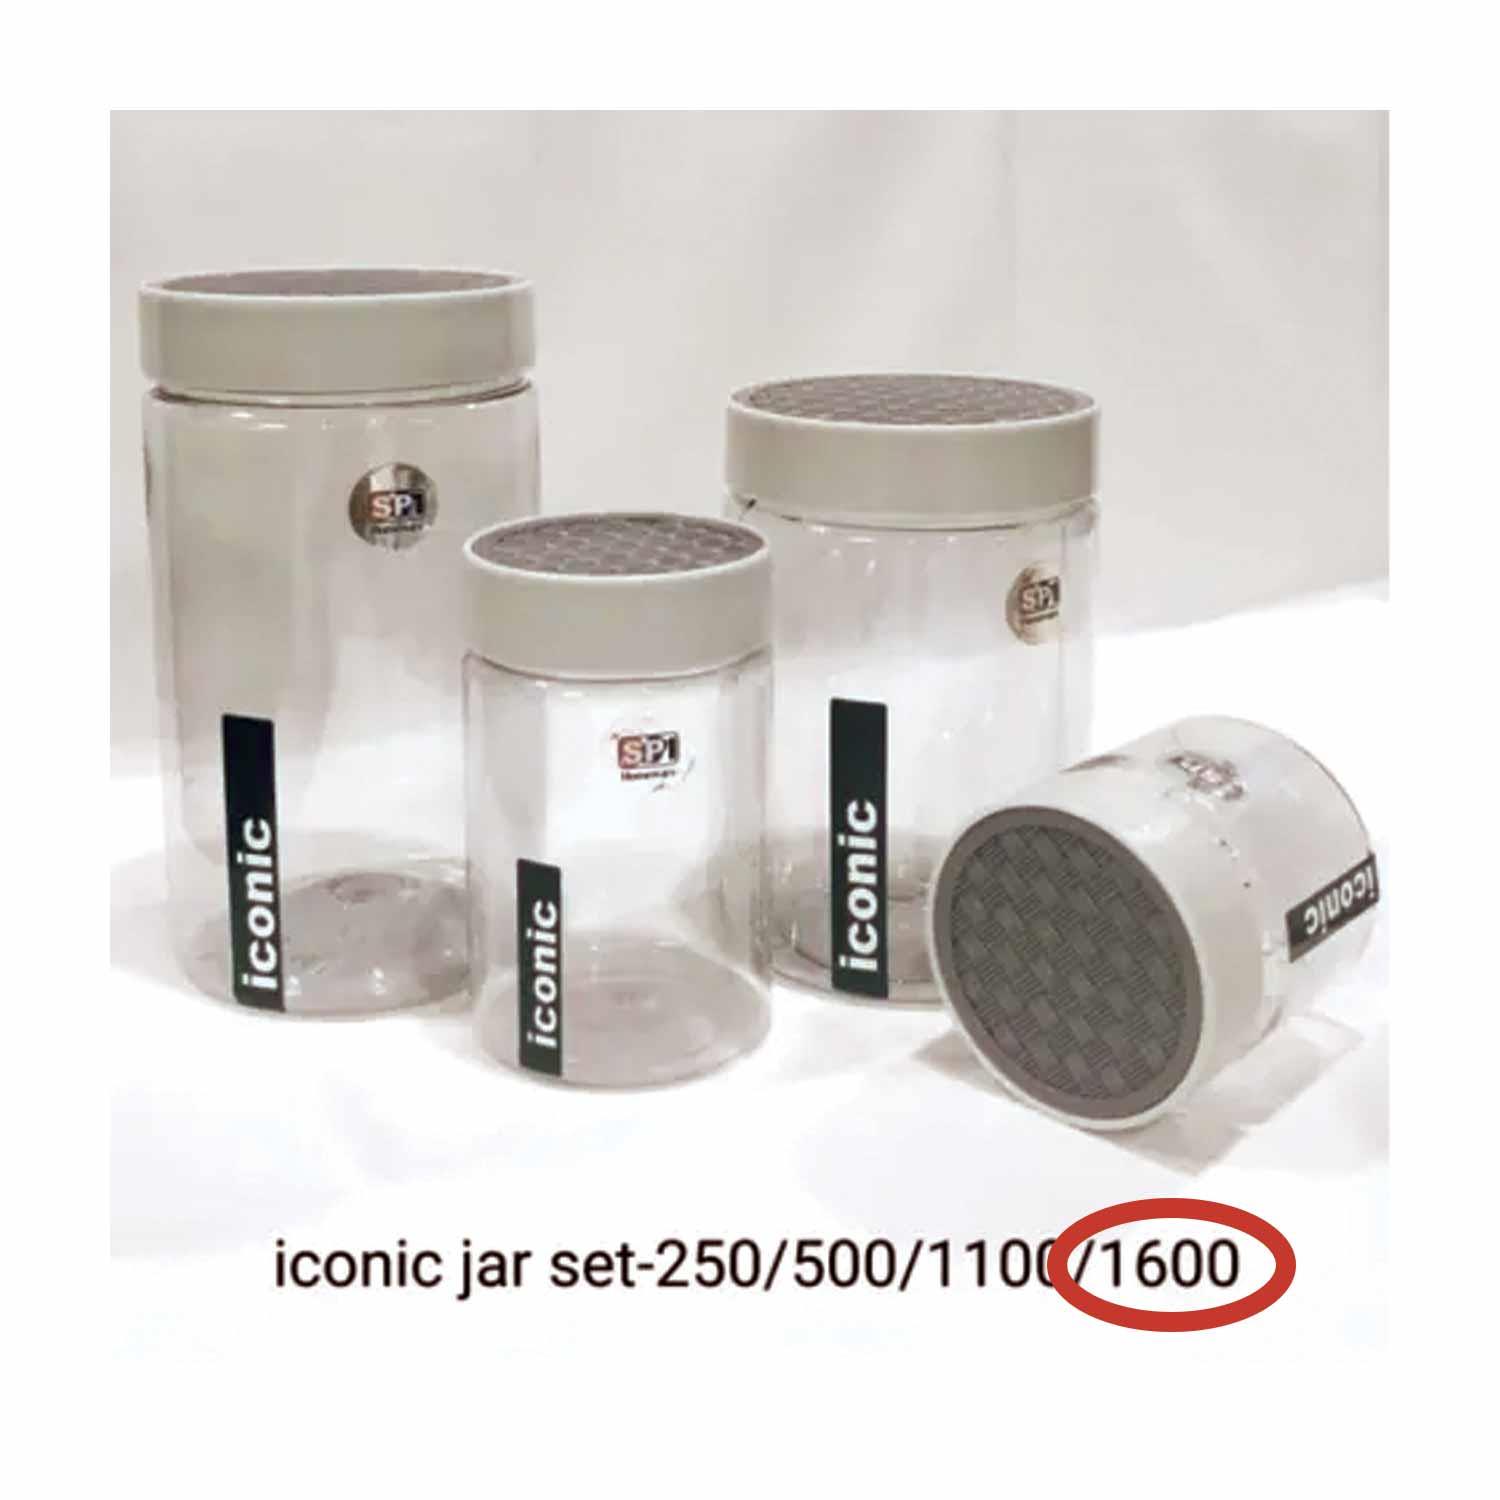 SP HOMEWARE ICONIC JAR 1600- 3PCS SET